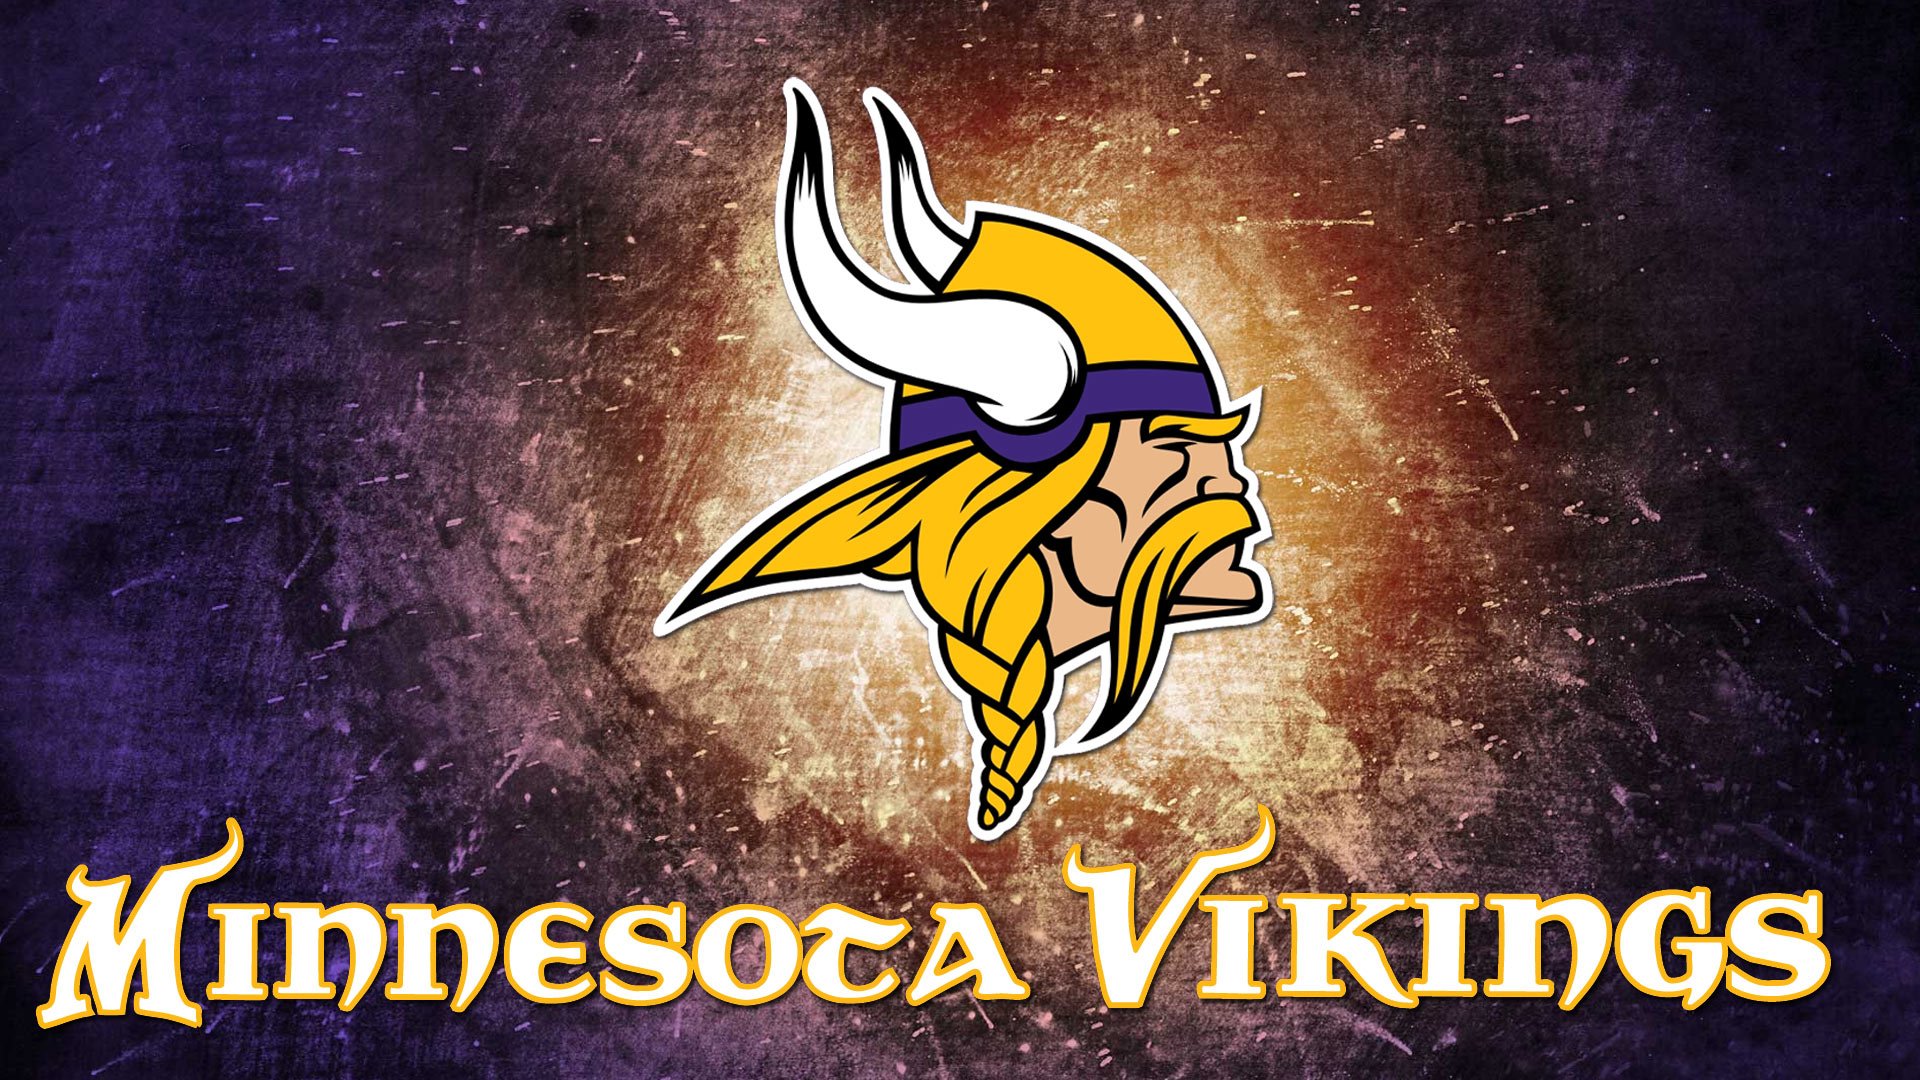 Minnesota Vikings logo Hd 1080p high quality Wallpaper screen size 1920x1080